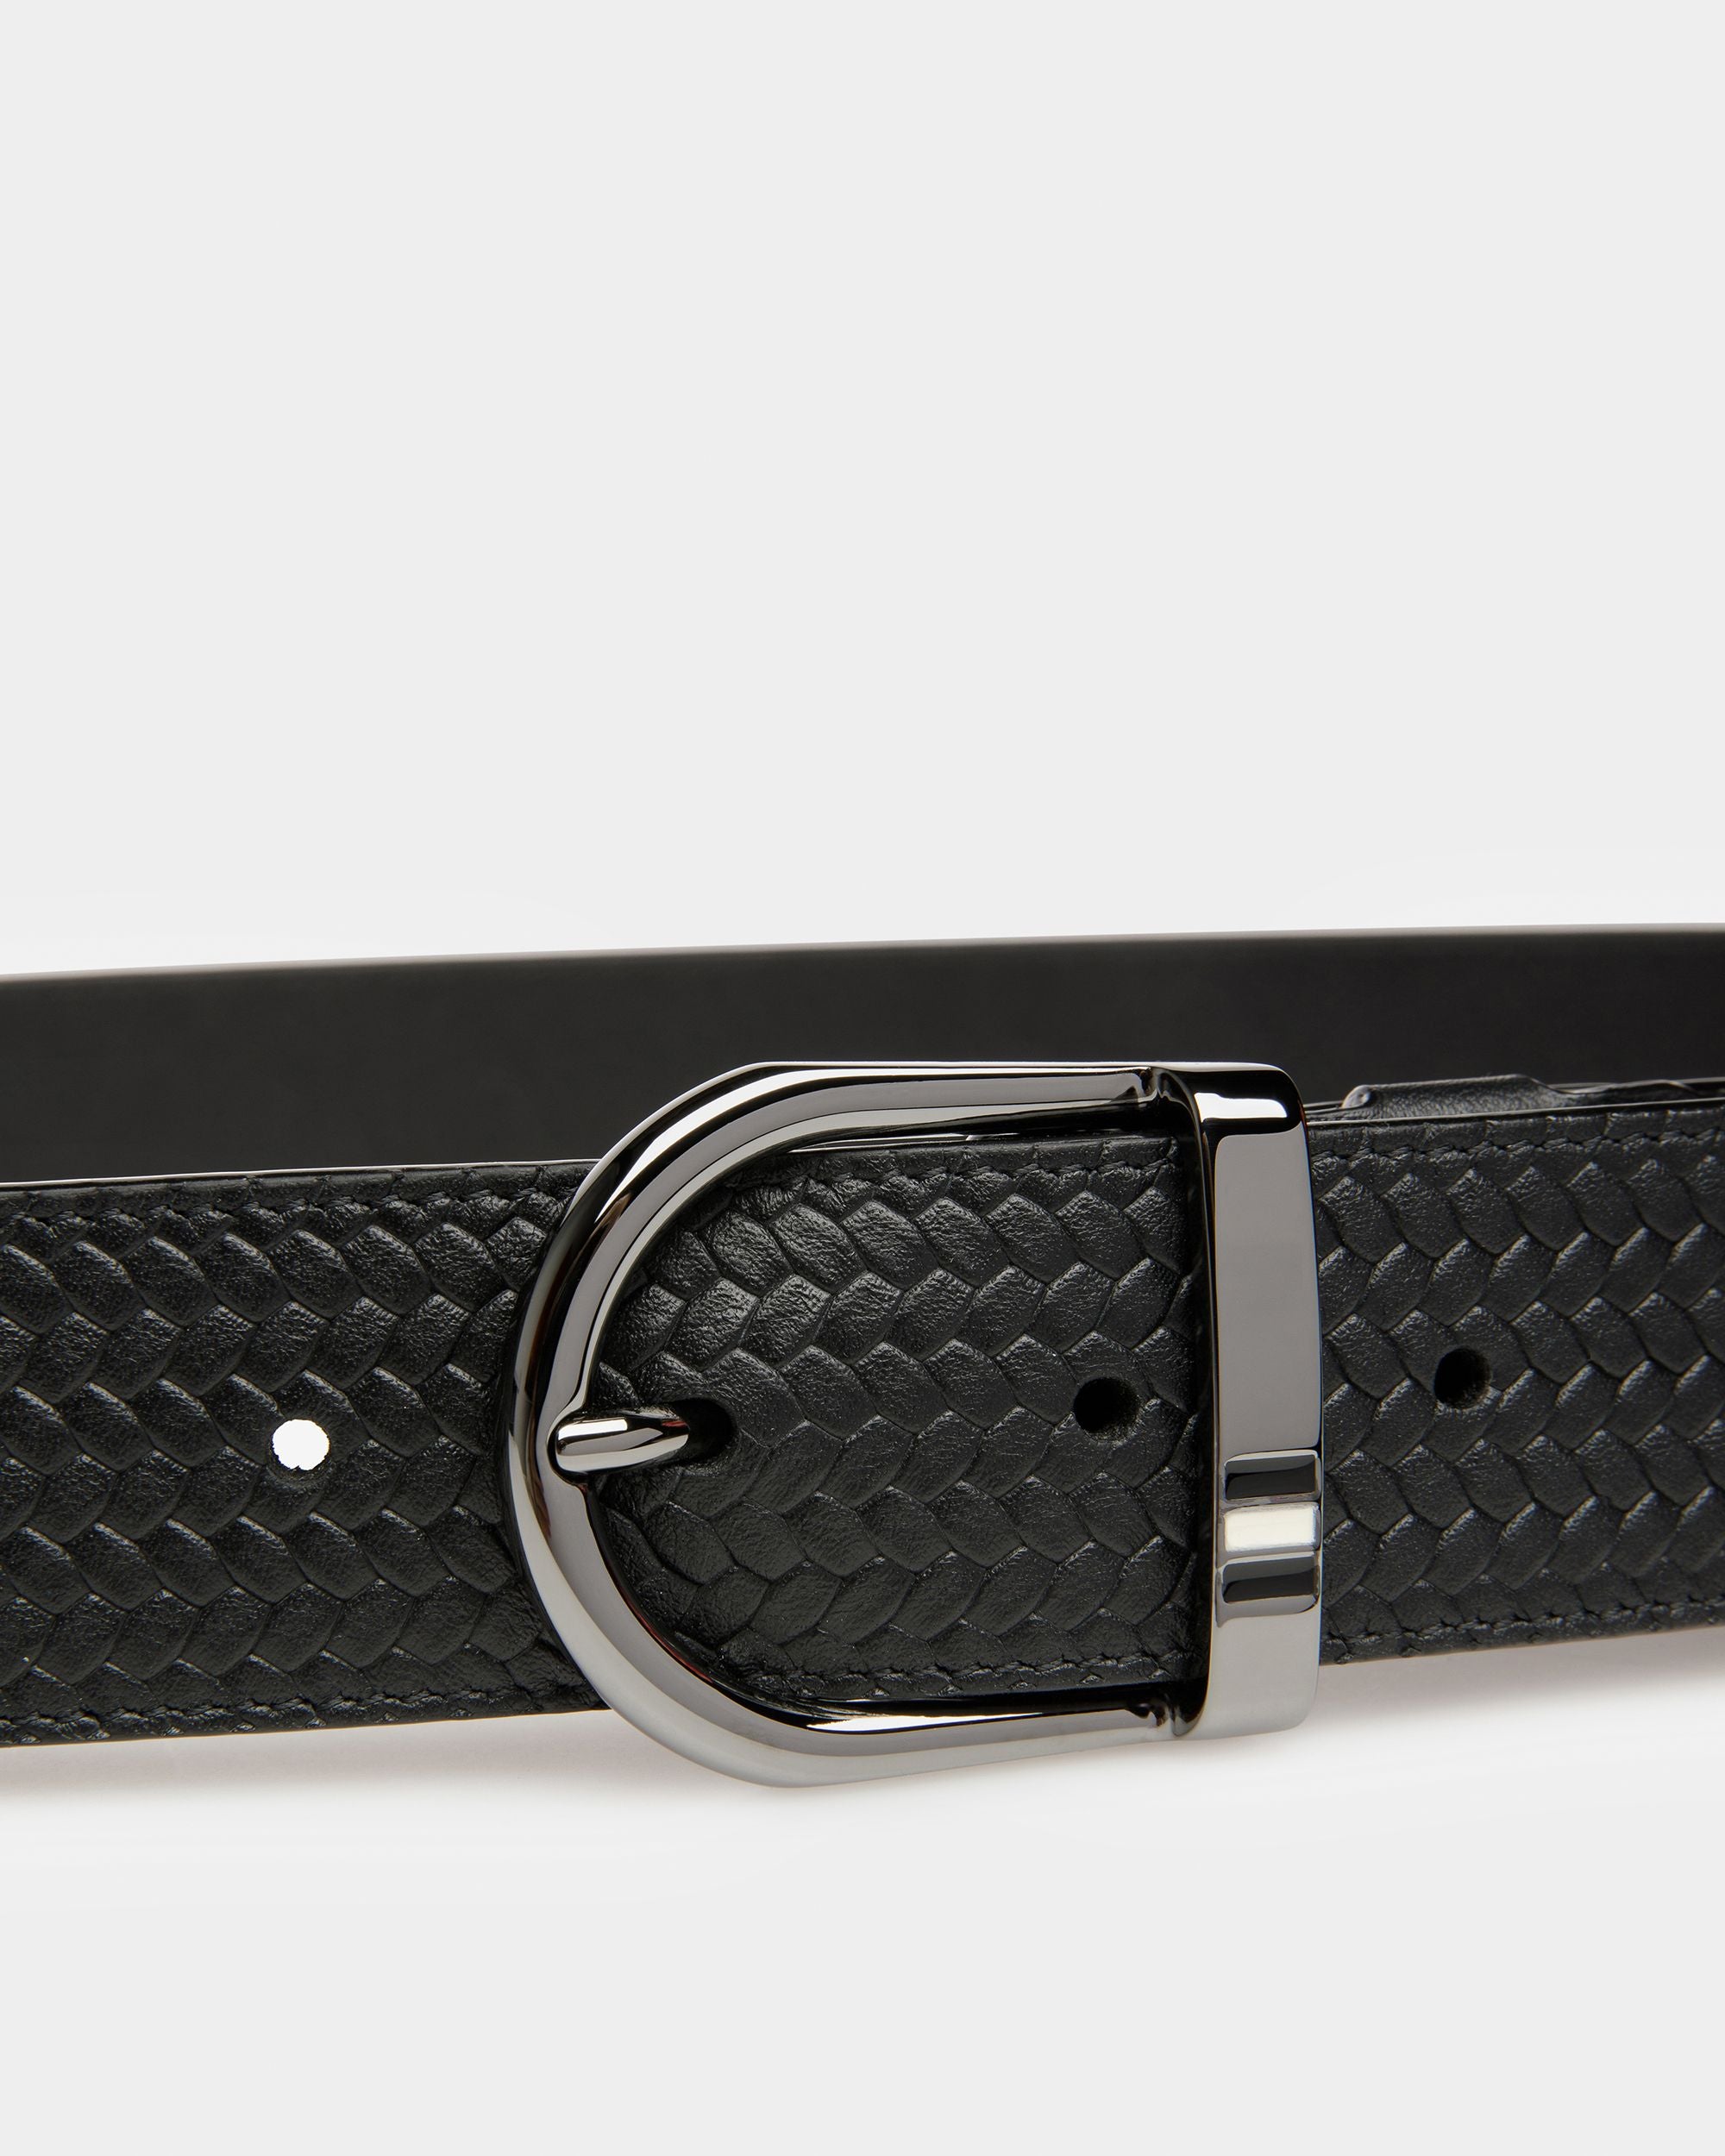 Salvatore Ferragamo 35mm Reversible Brown And Black Leather Belt New FW23